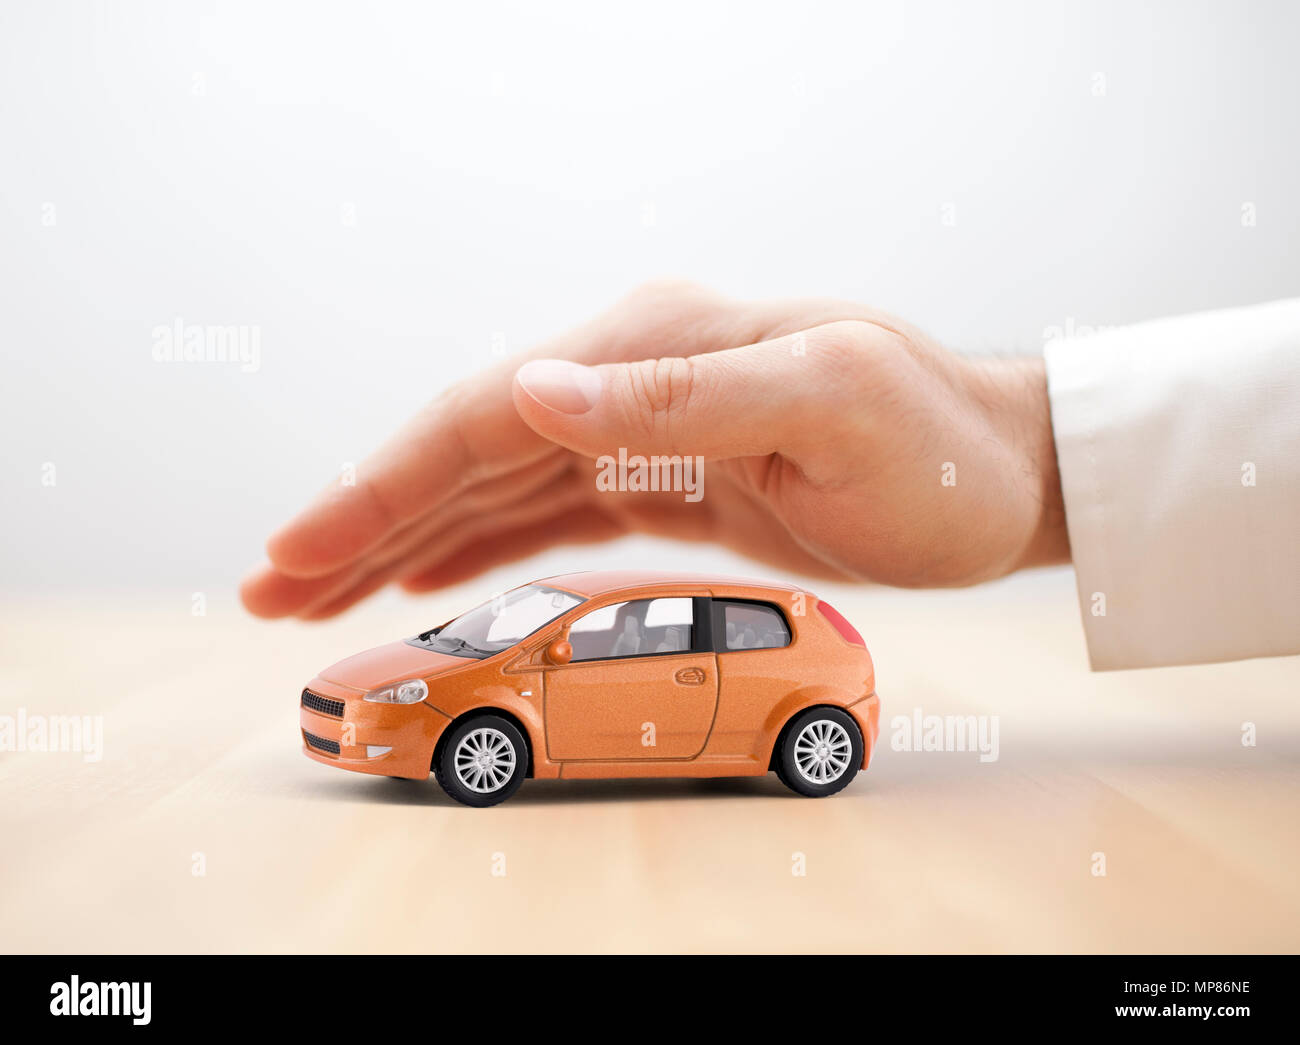 Car insurance concept Stock Photo